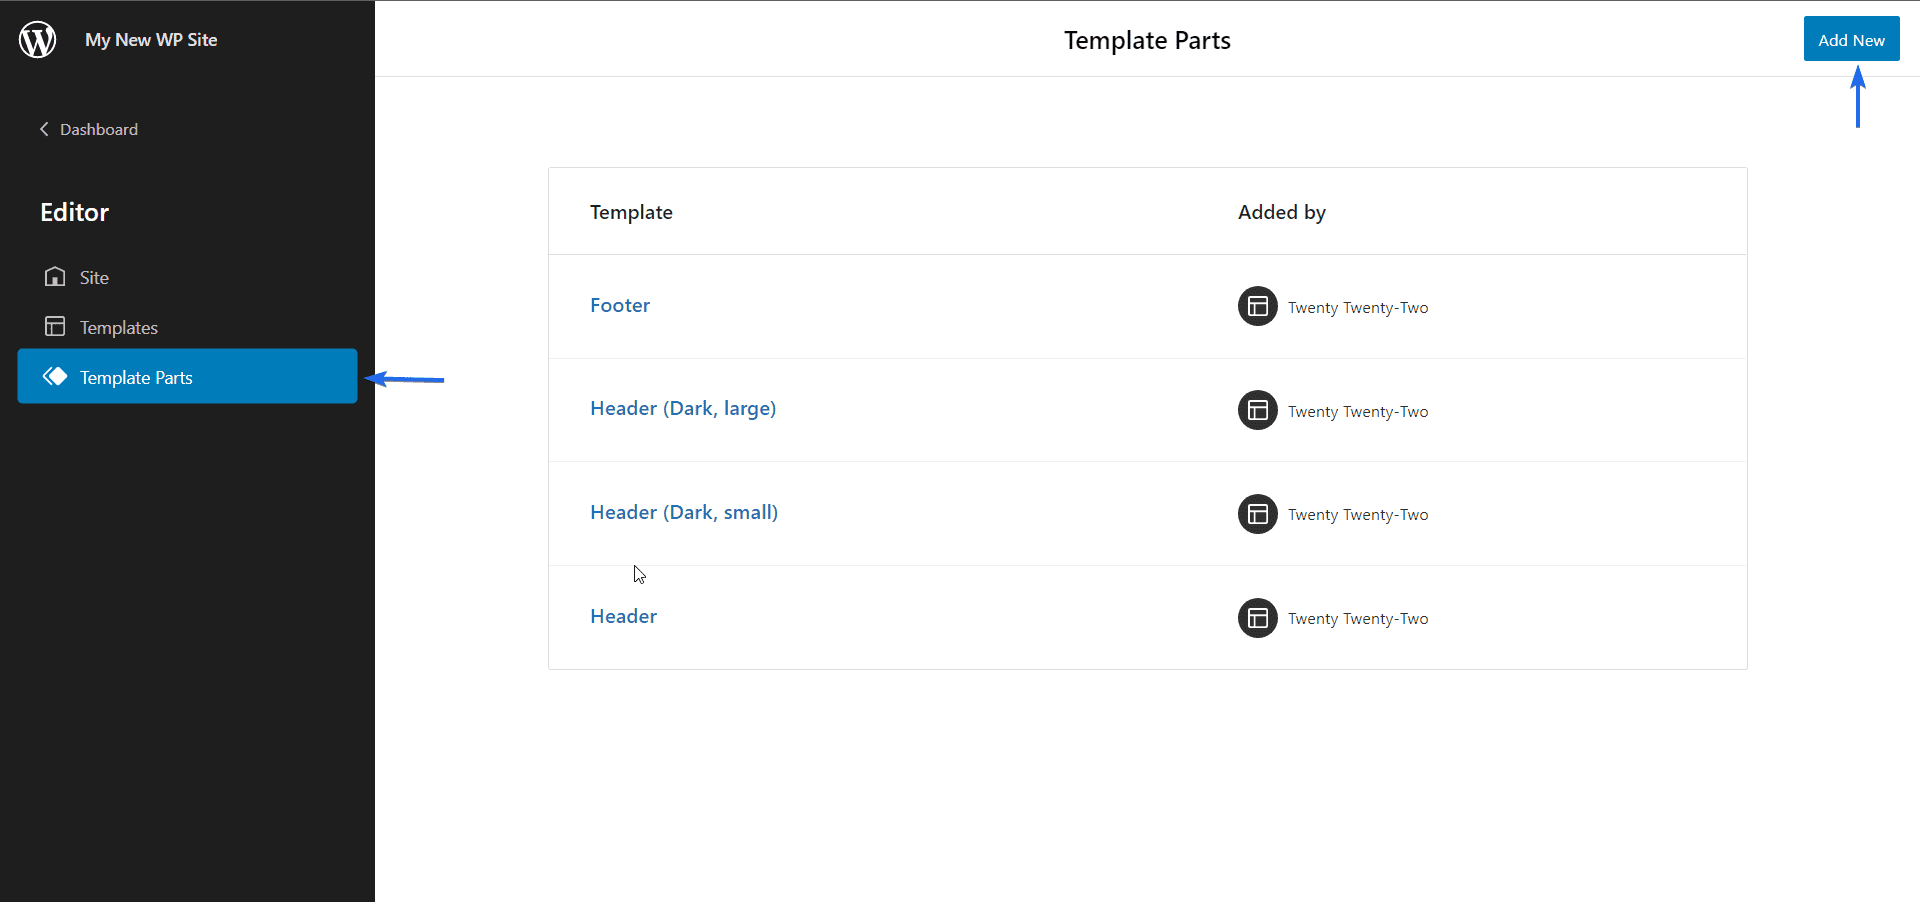 Template Parts menu